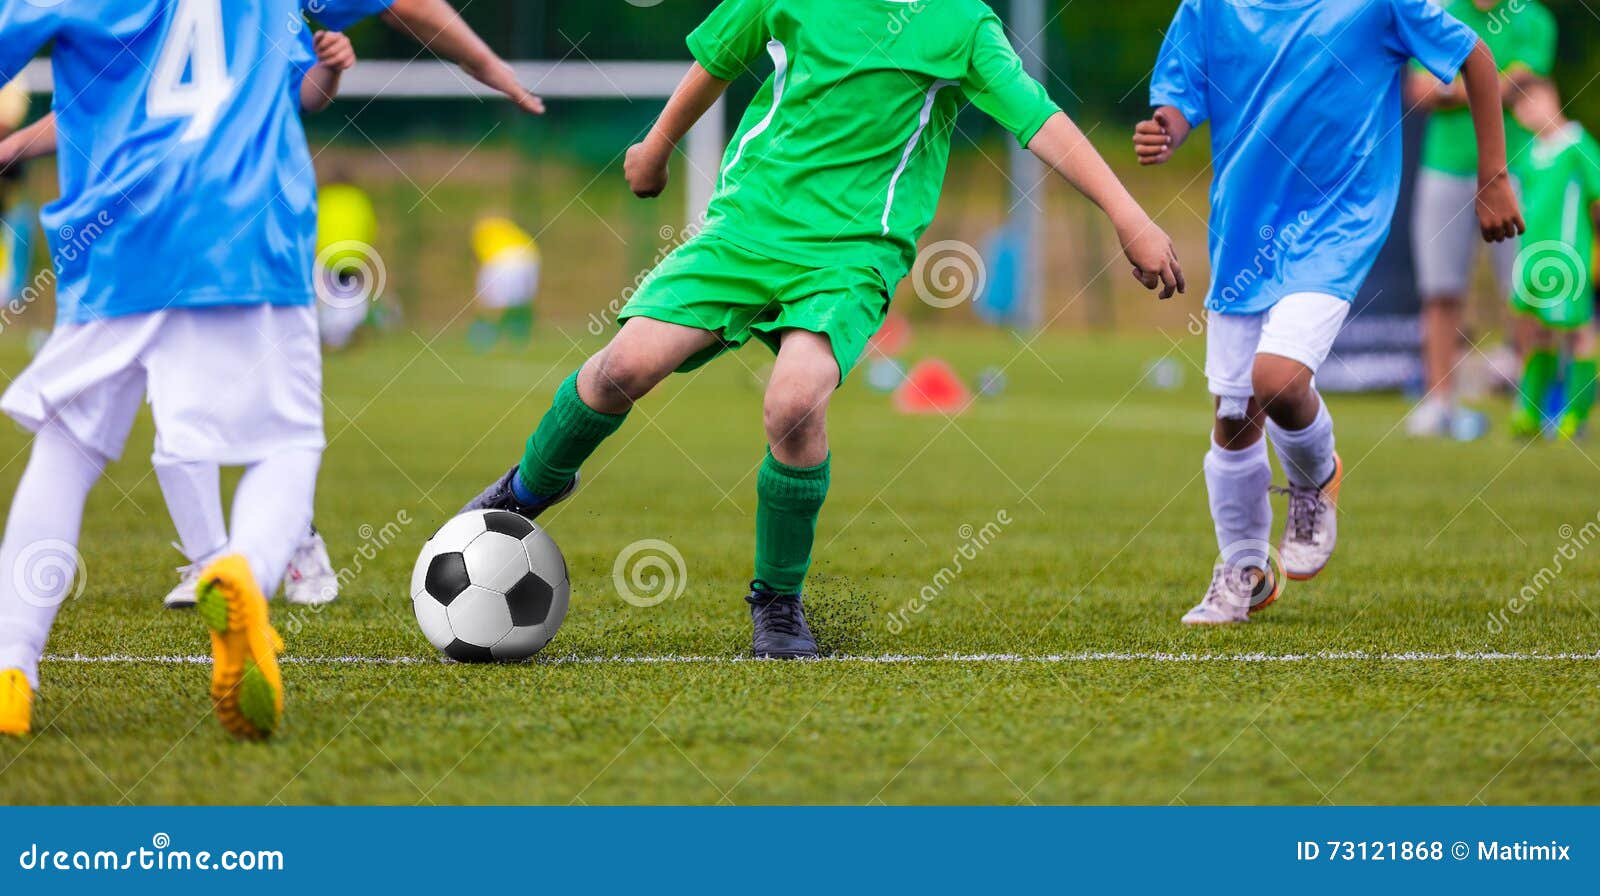 youth soccer football teams kicking soccer ball on sports field